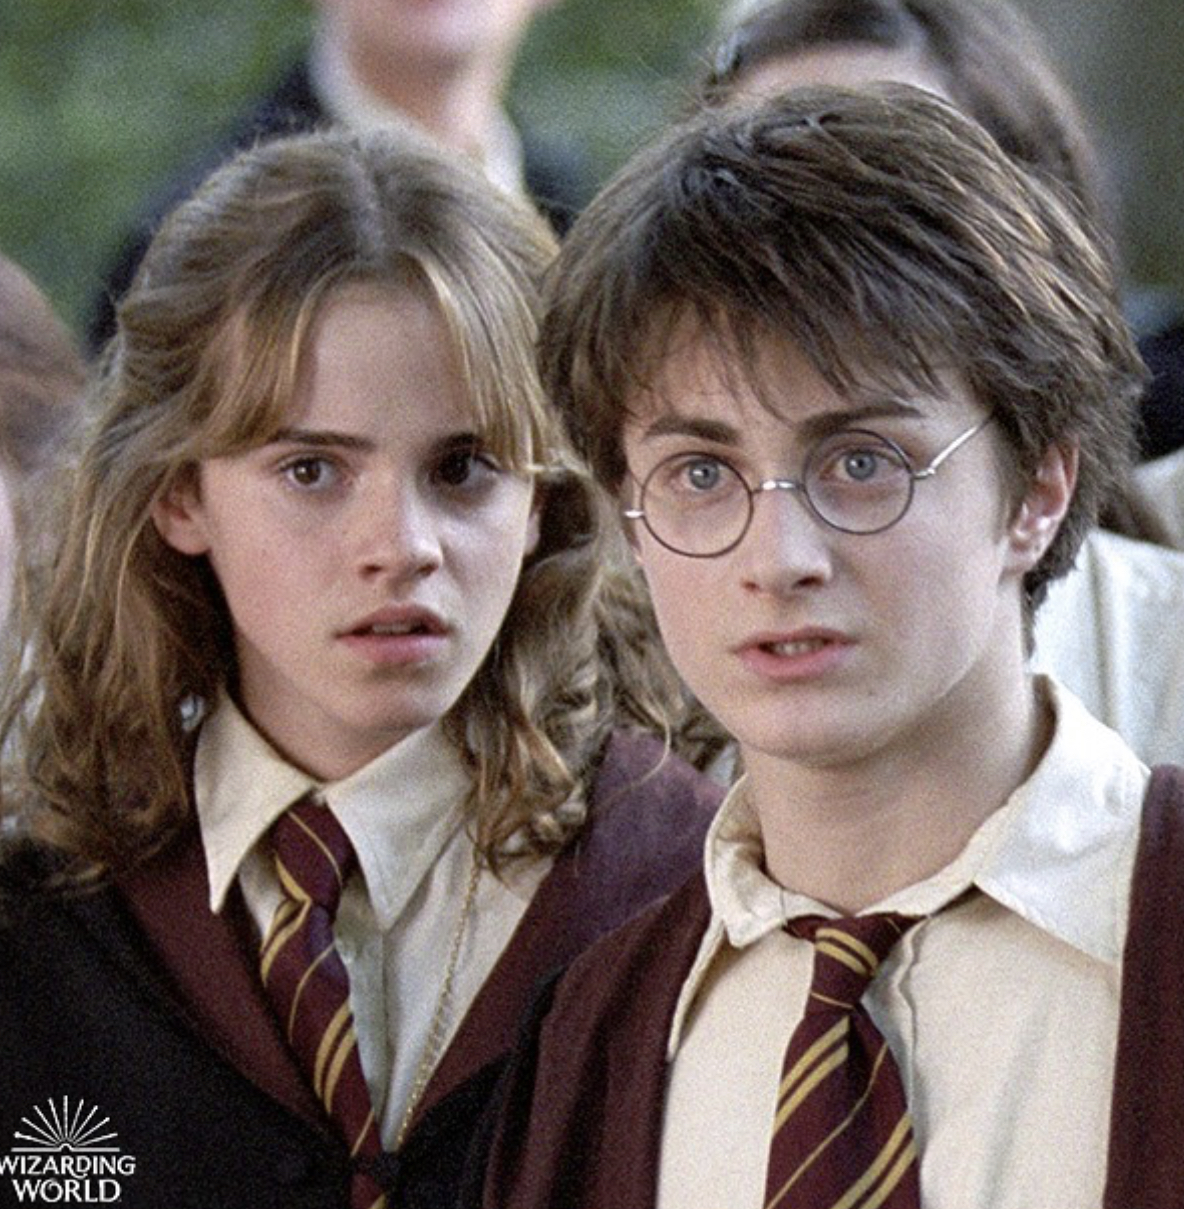 Daniel Radcliffe i Emma Watson su veoma emotivni dok govore o “Harry Potteru”